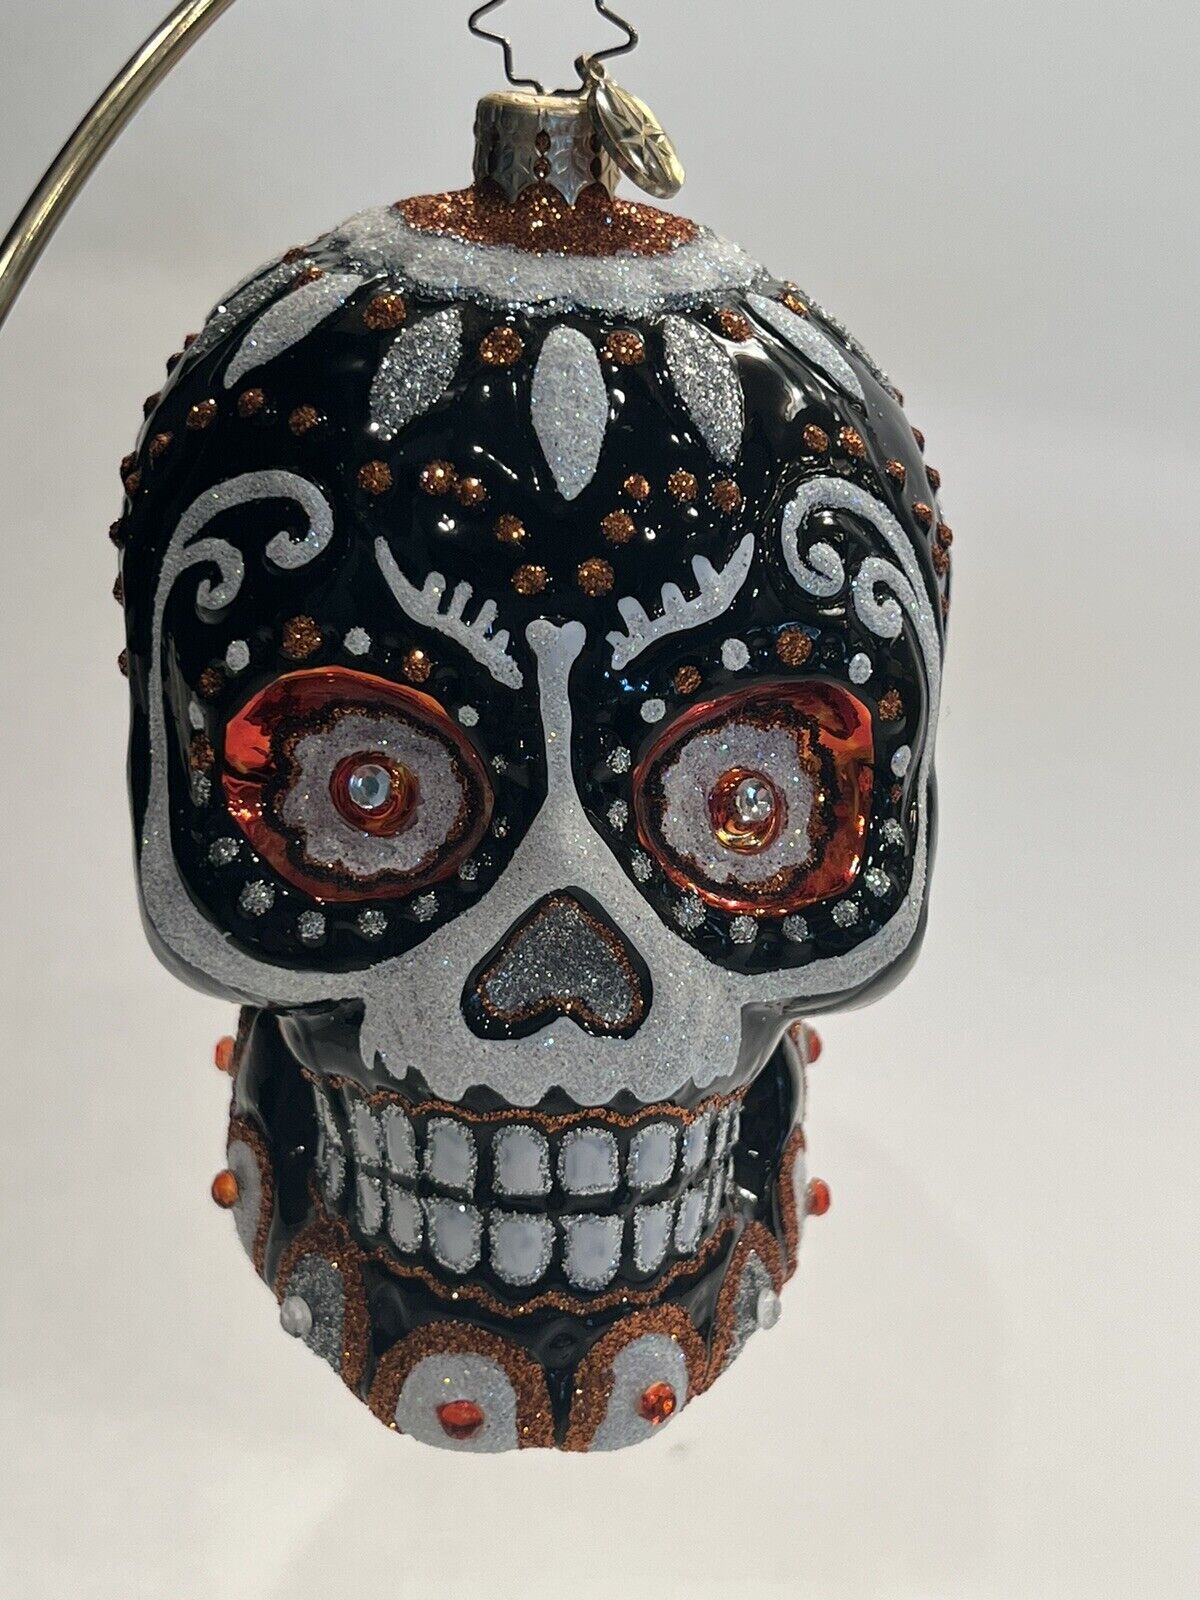 Christopher Radko Sugar Skull Day of the Dead Halloween Ornament